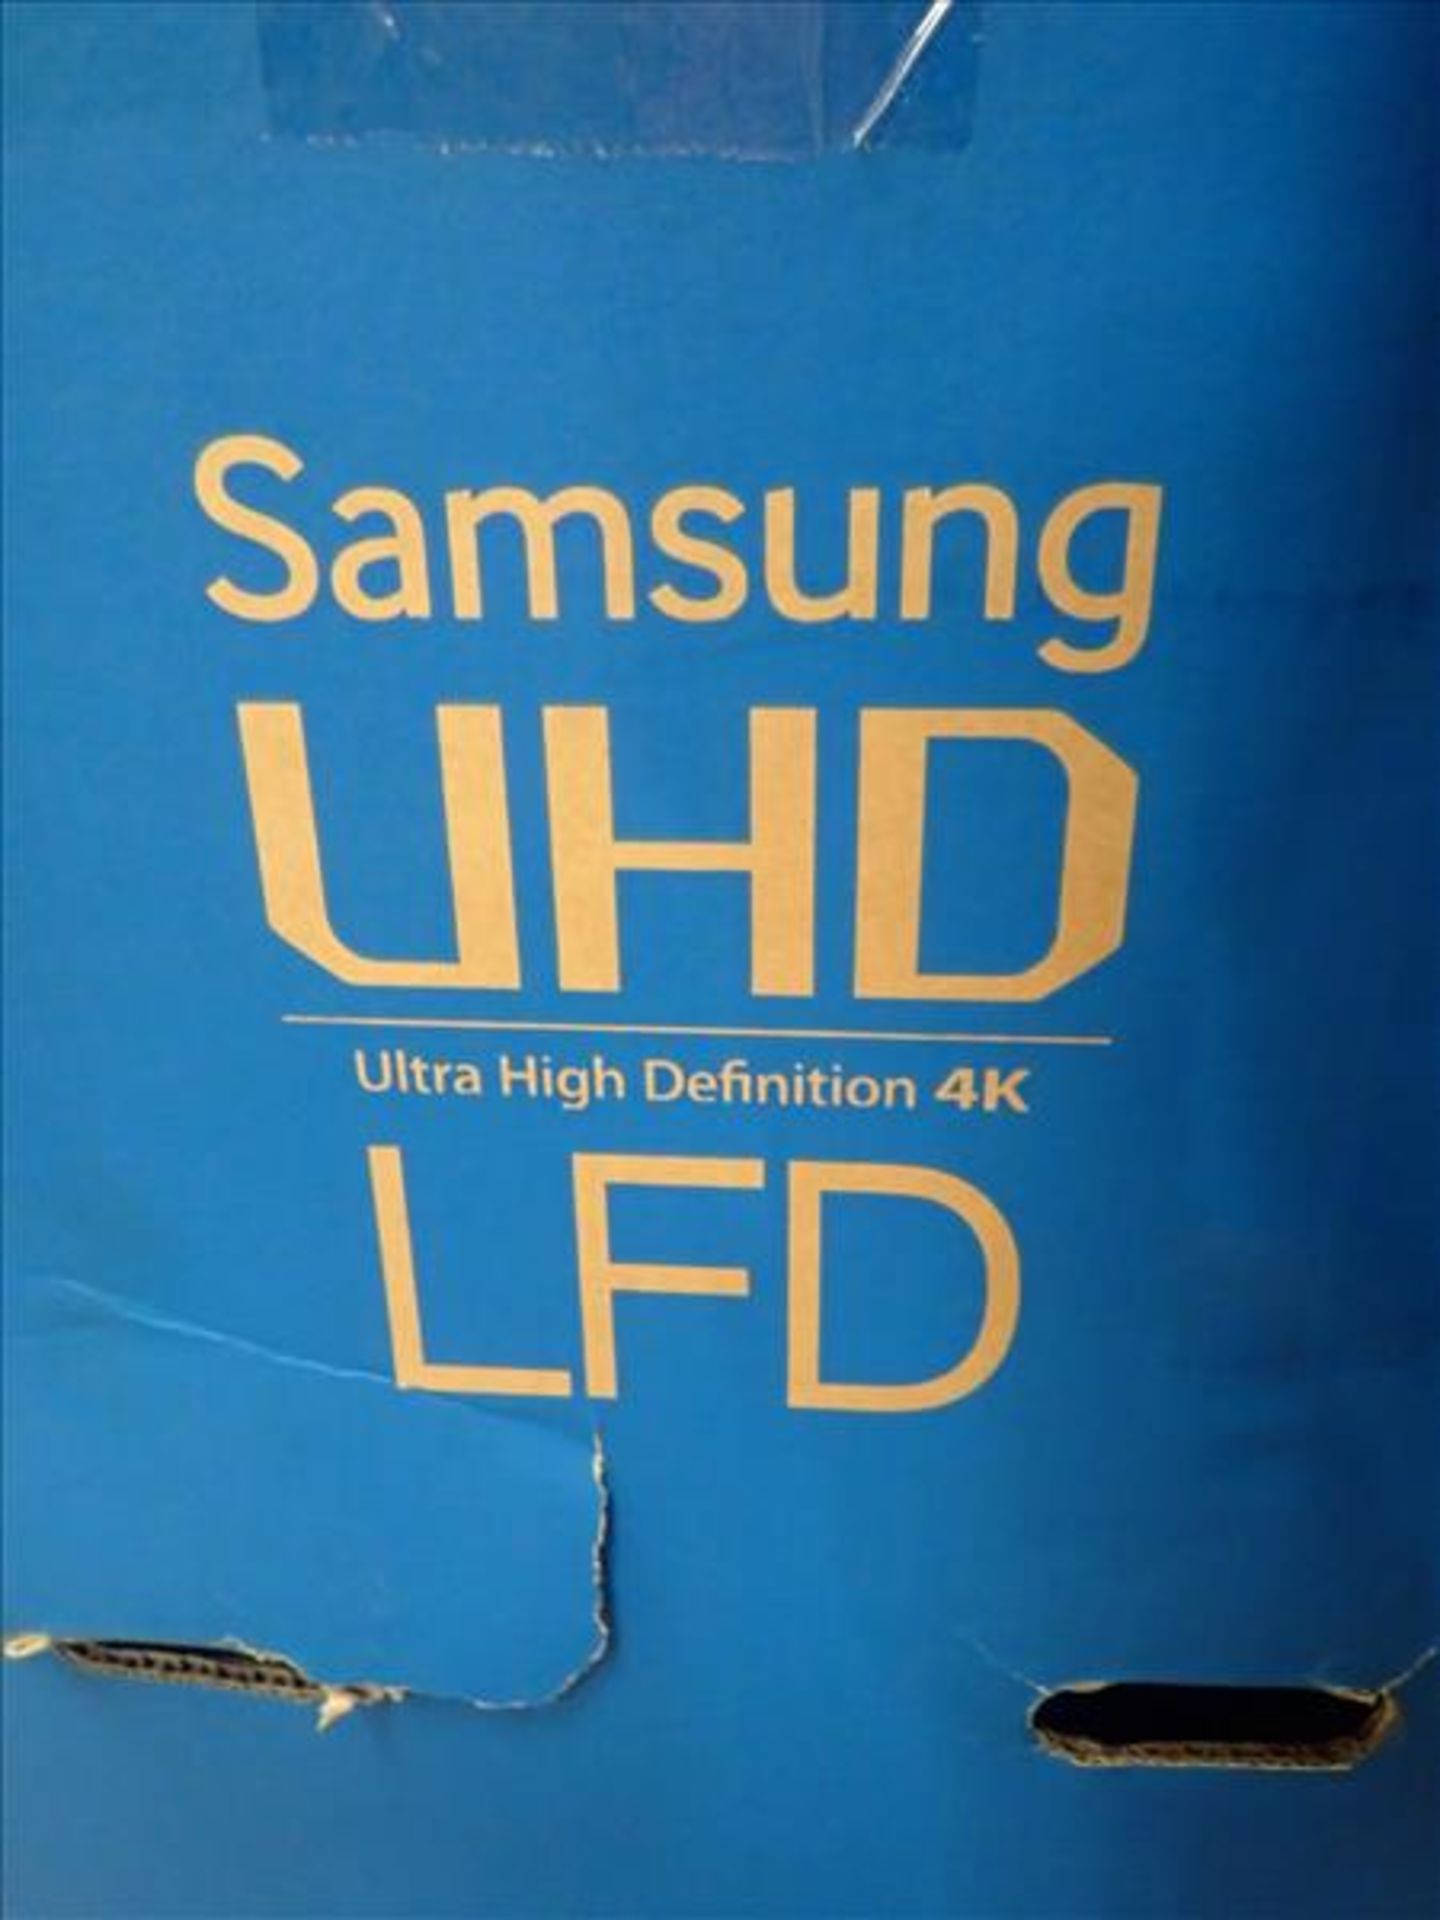 85 in. Samsung UHD LED LFD professional large format display/digital signage, mod. QM85F, 16:9 - - Image 6 of 6